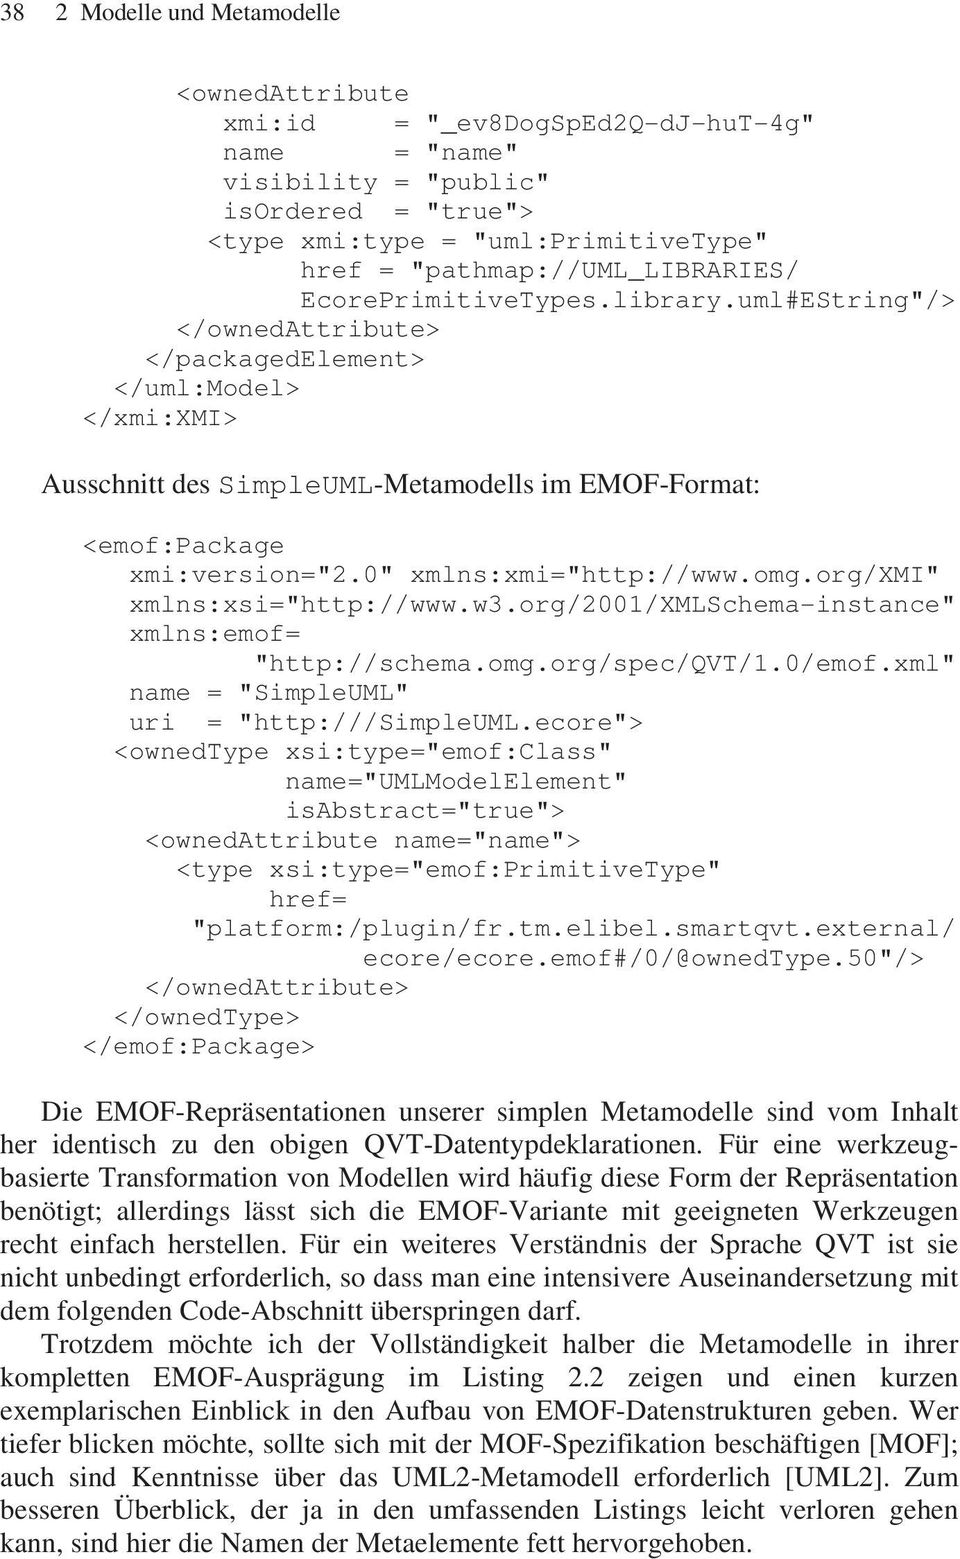 uml#EString"/> </ownedattribute> </packagedelement> </uml:model> </xmi:xmi> Ausschnitt des SimpleUML-Metamodells im EMOF-Format: <emof:package xmi:version="2.0" xmlns:xmi="http://www.omg.